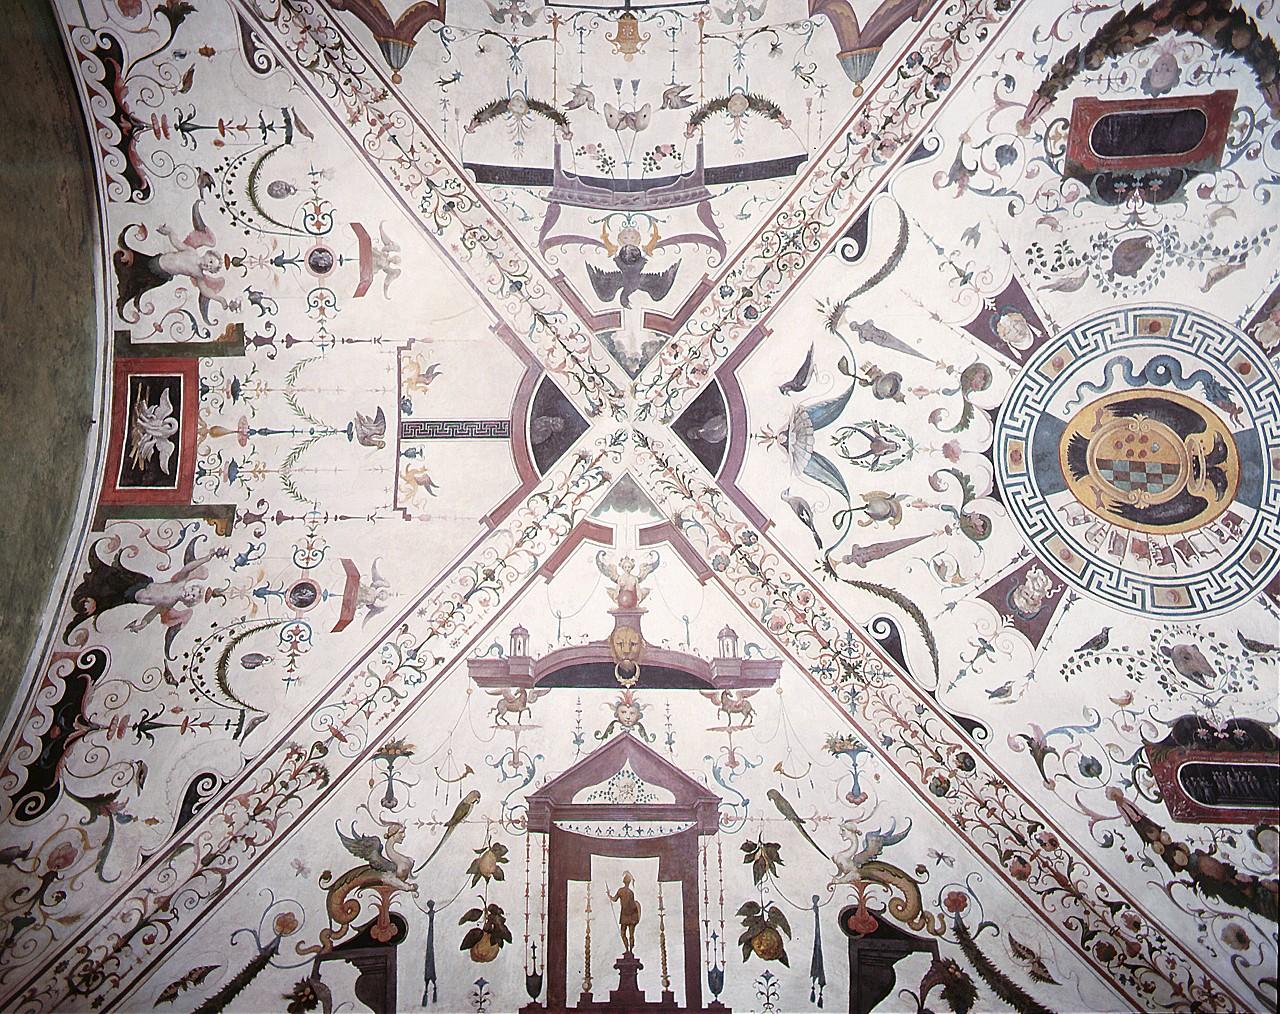 motivi decorativi a grottesche (dipinto) di Bigordi Ridolfo detto Ridolfo Ghirlandaio (sec. XVI)